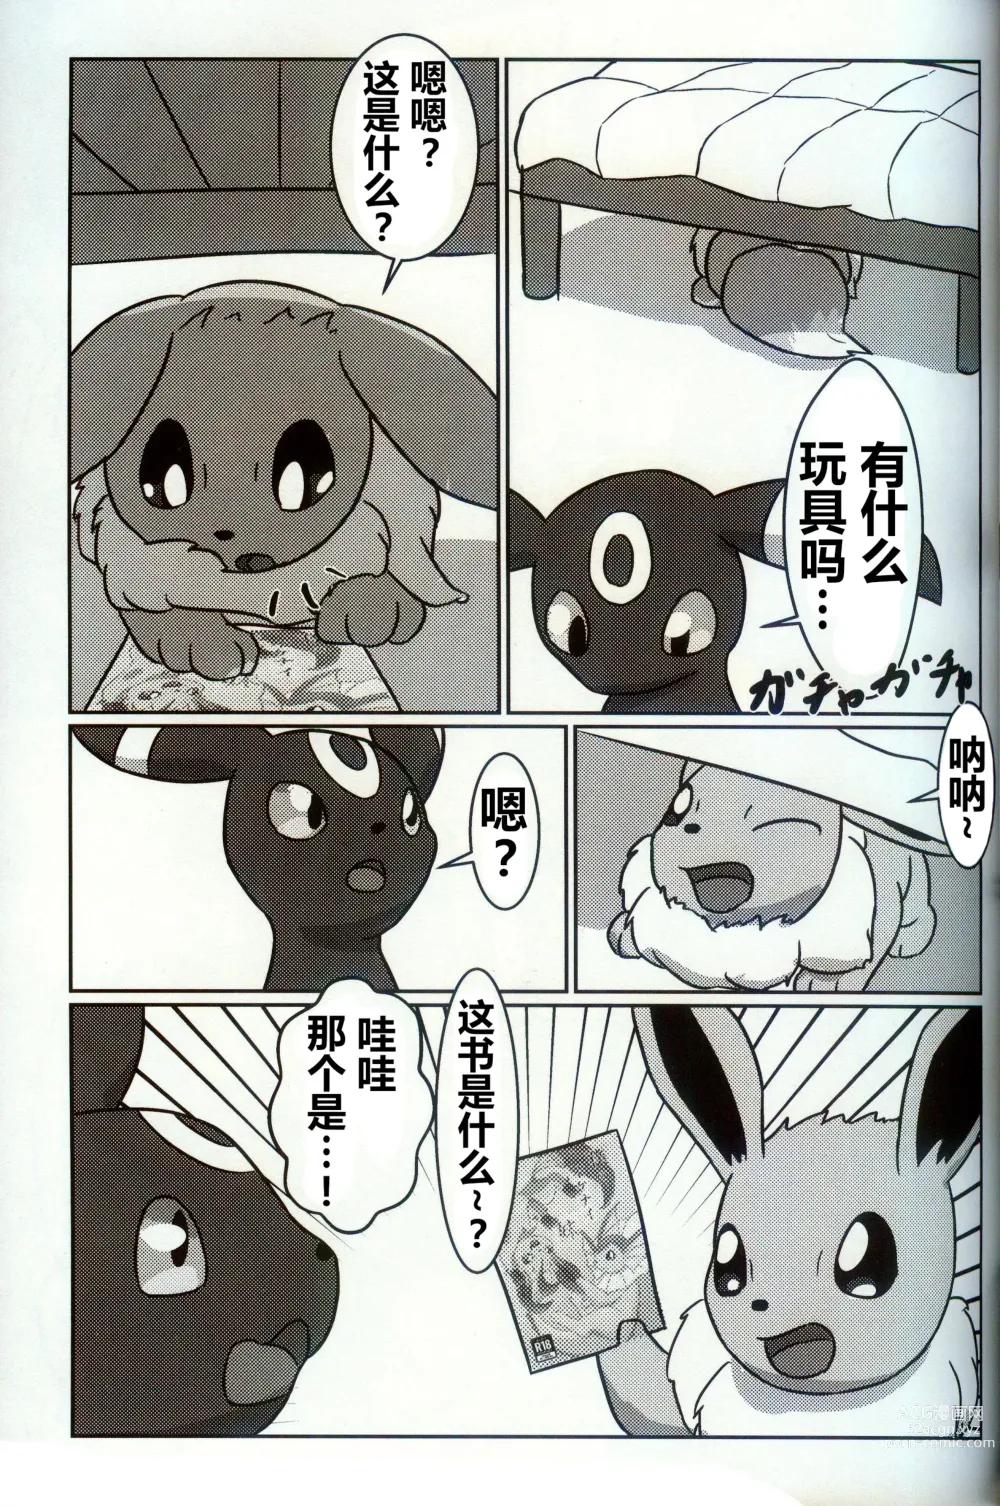 Page 7 of doujinshi 被拜托照顾附近的双胞胎发生了不得了的事...